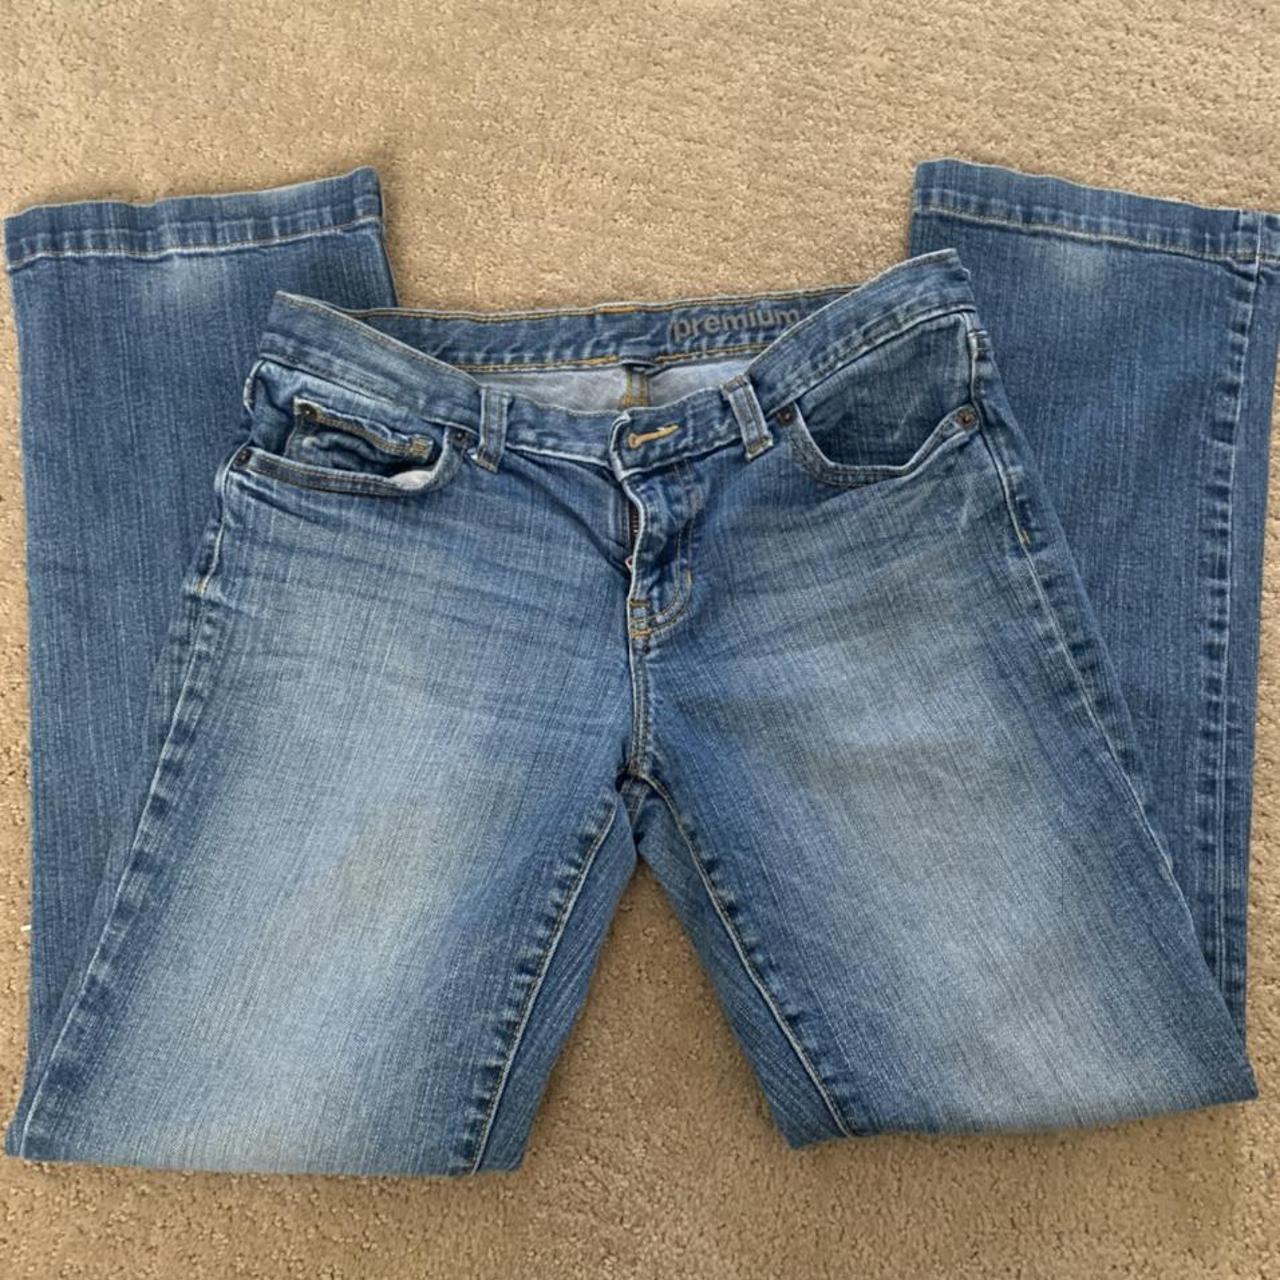 Gap Low Rise Jeans Waist: 15” Inseam: 27” Outseam: 35” - Depop